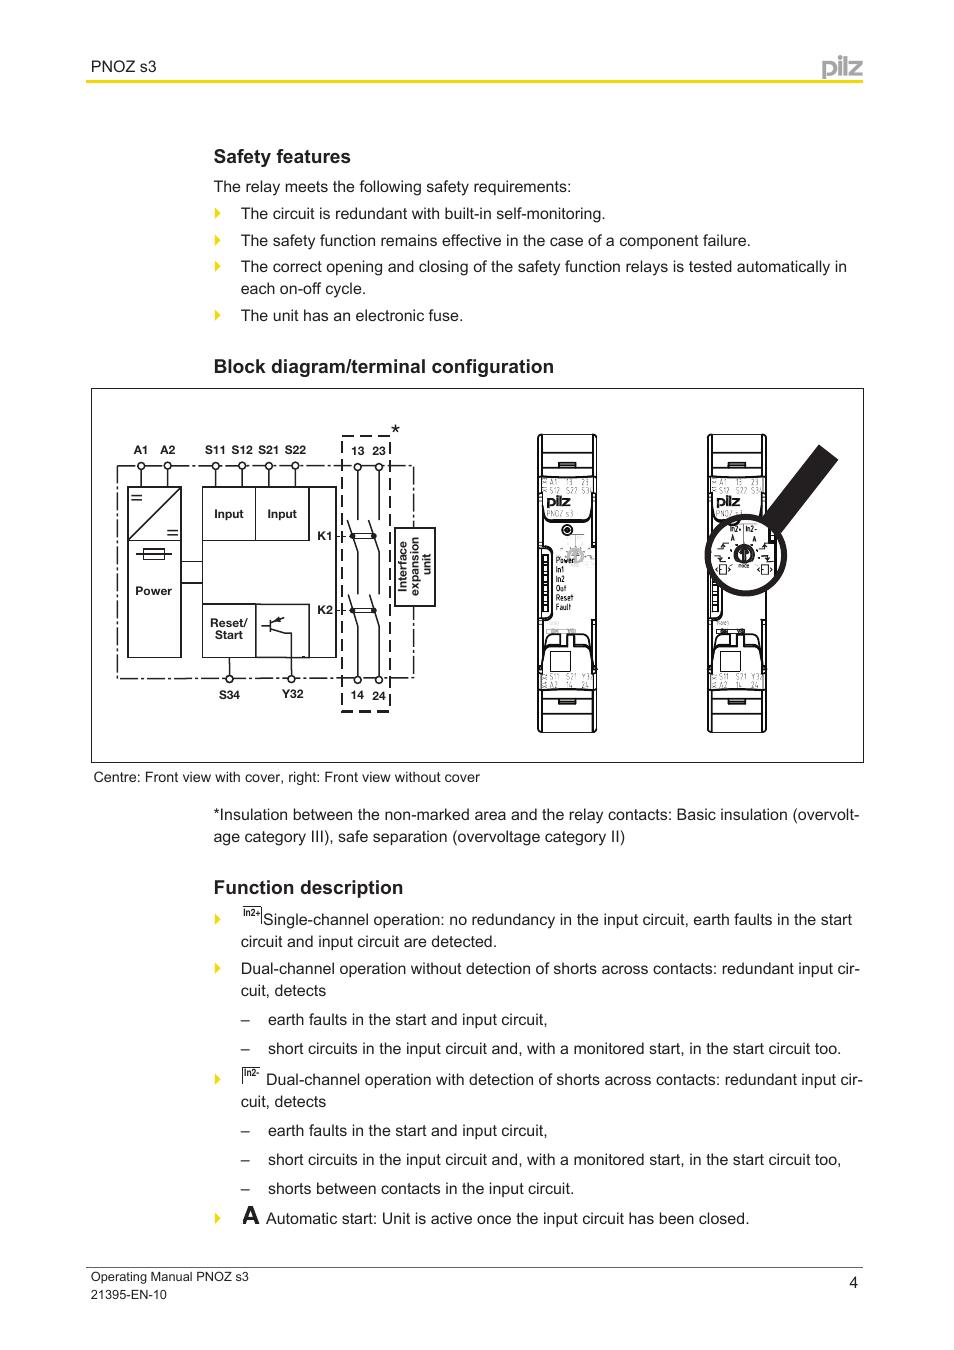 Safety features, Block diagram/terminal configuration ...